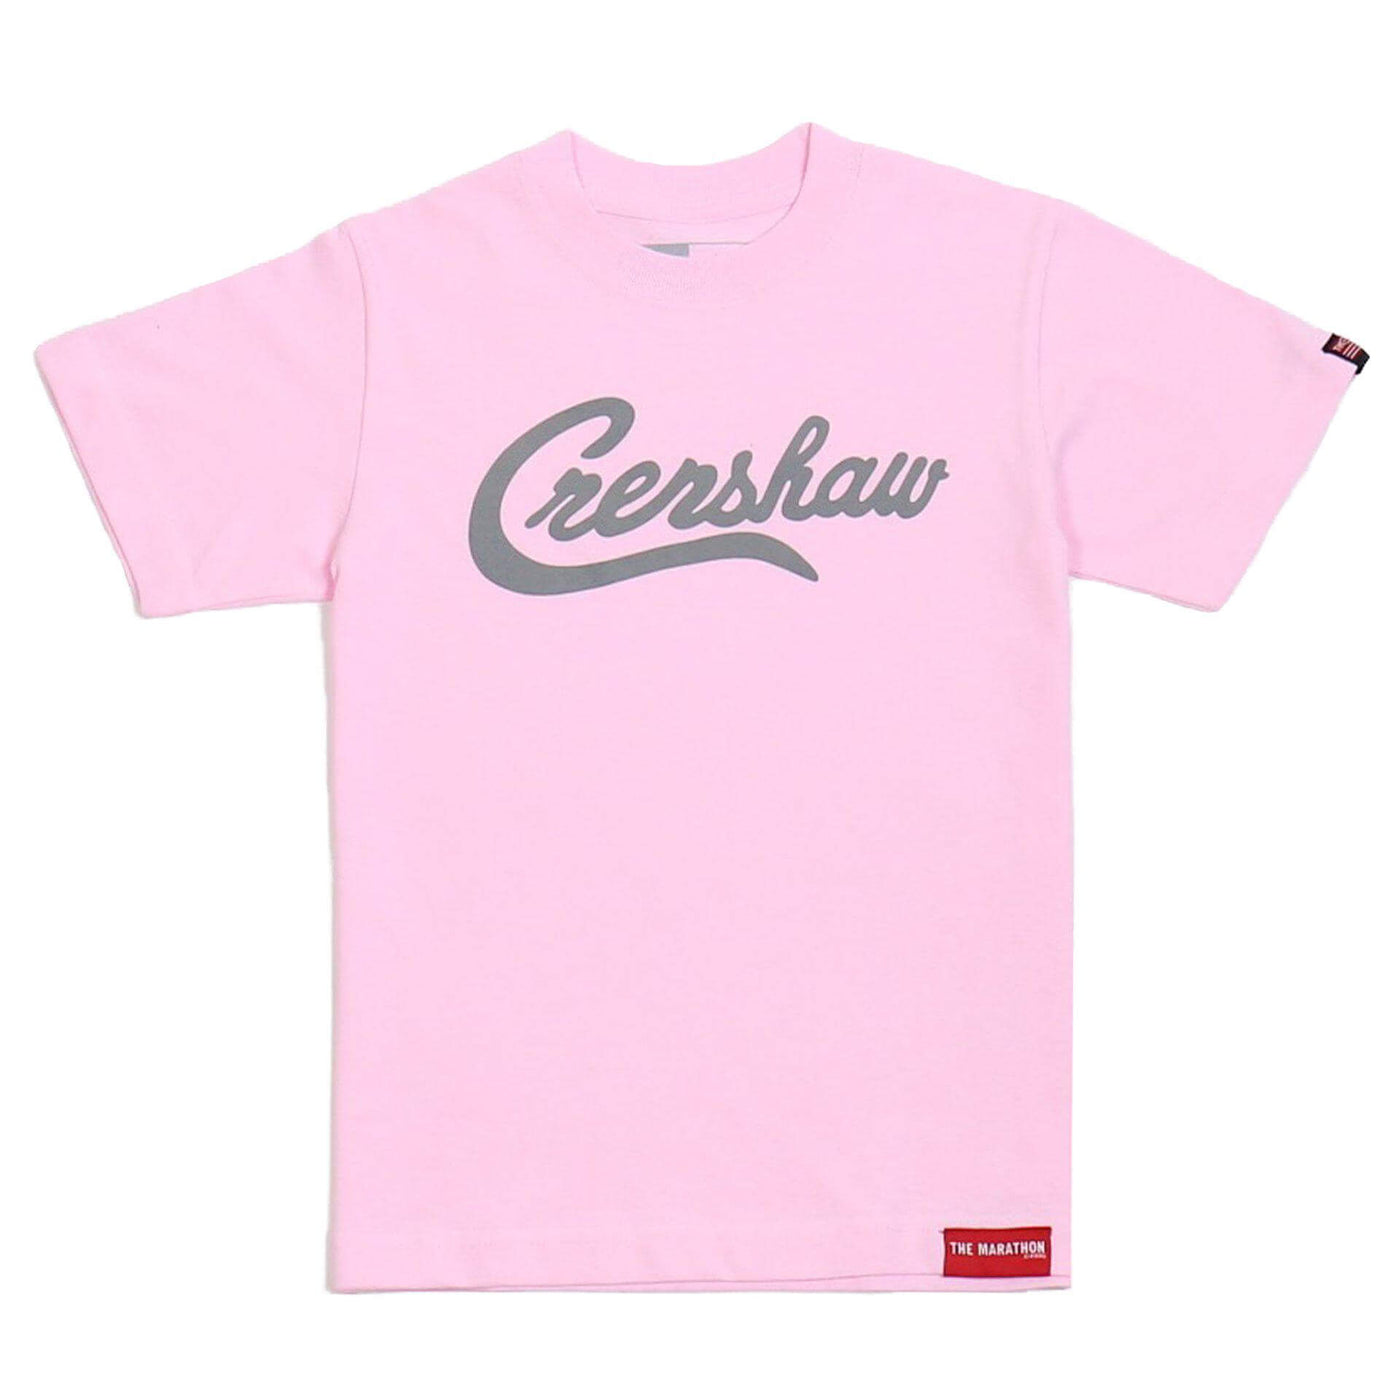 Crenshaw Kid's T-Shirt - Pink/Gray-The Marathon Clothing